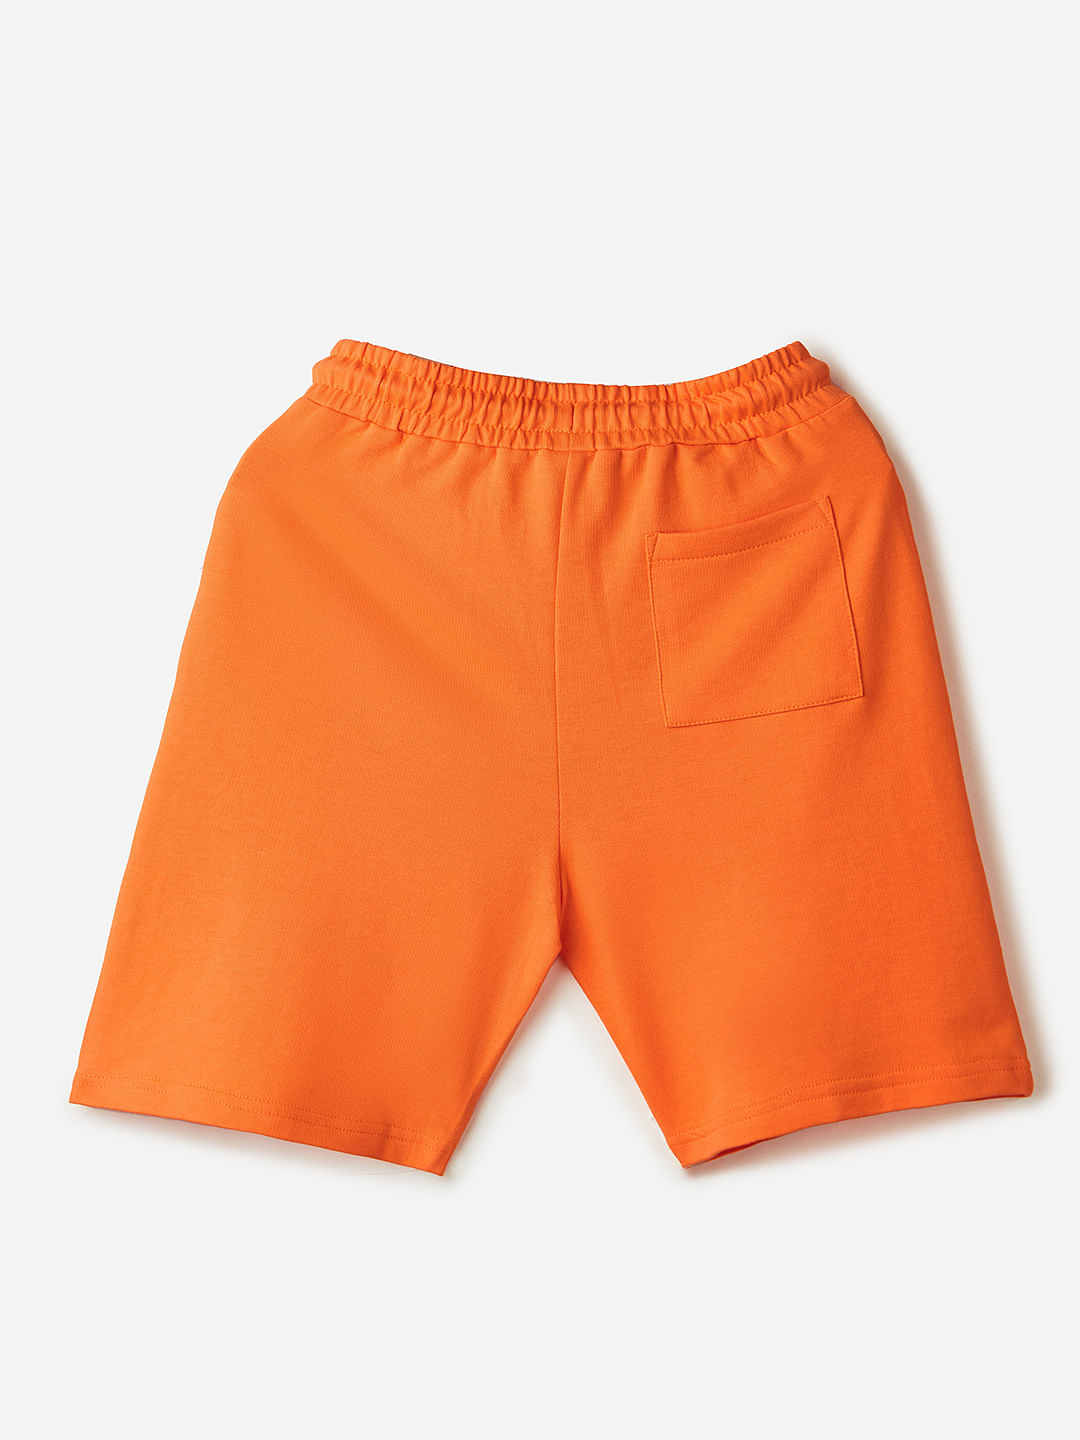 Naruto: Believe It Boys Cotton Shorts price